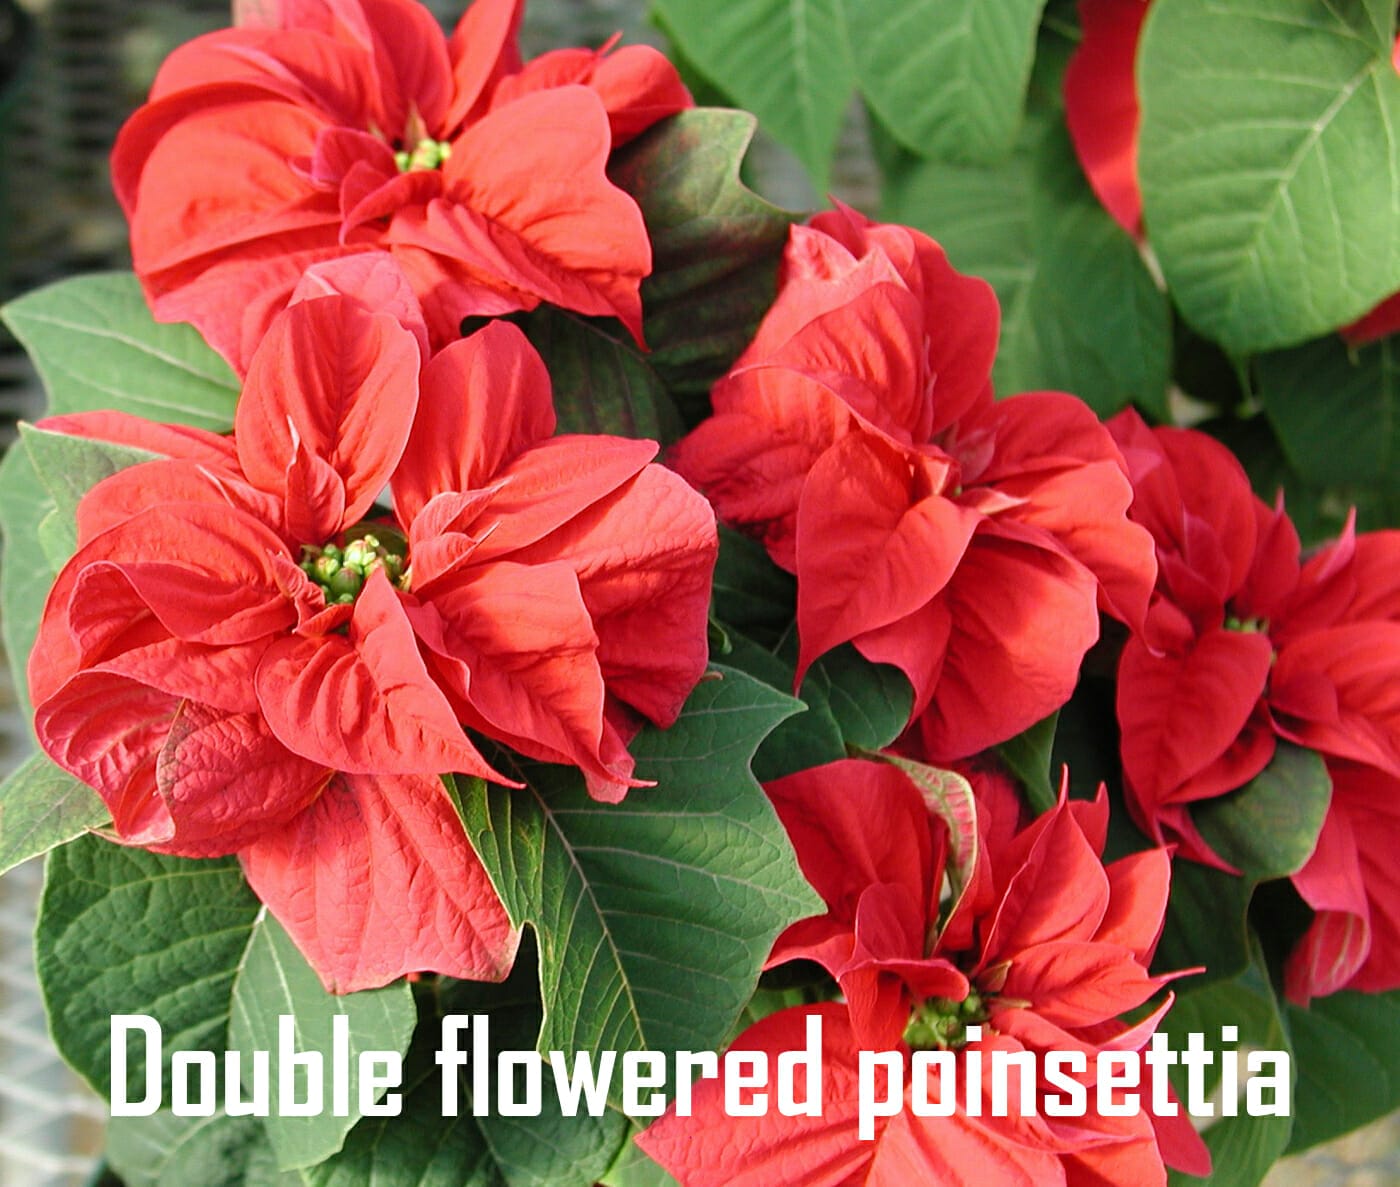 Double flowered poinsettia